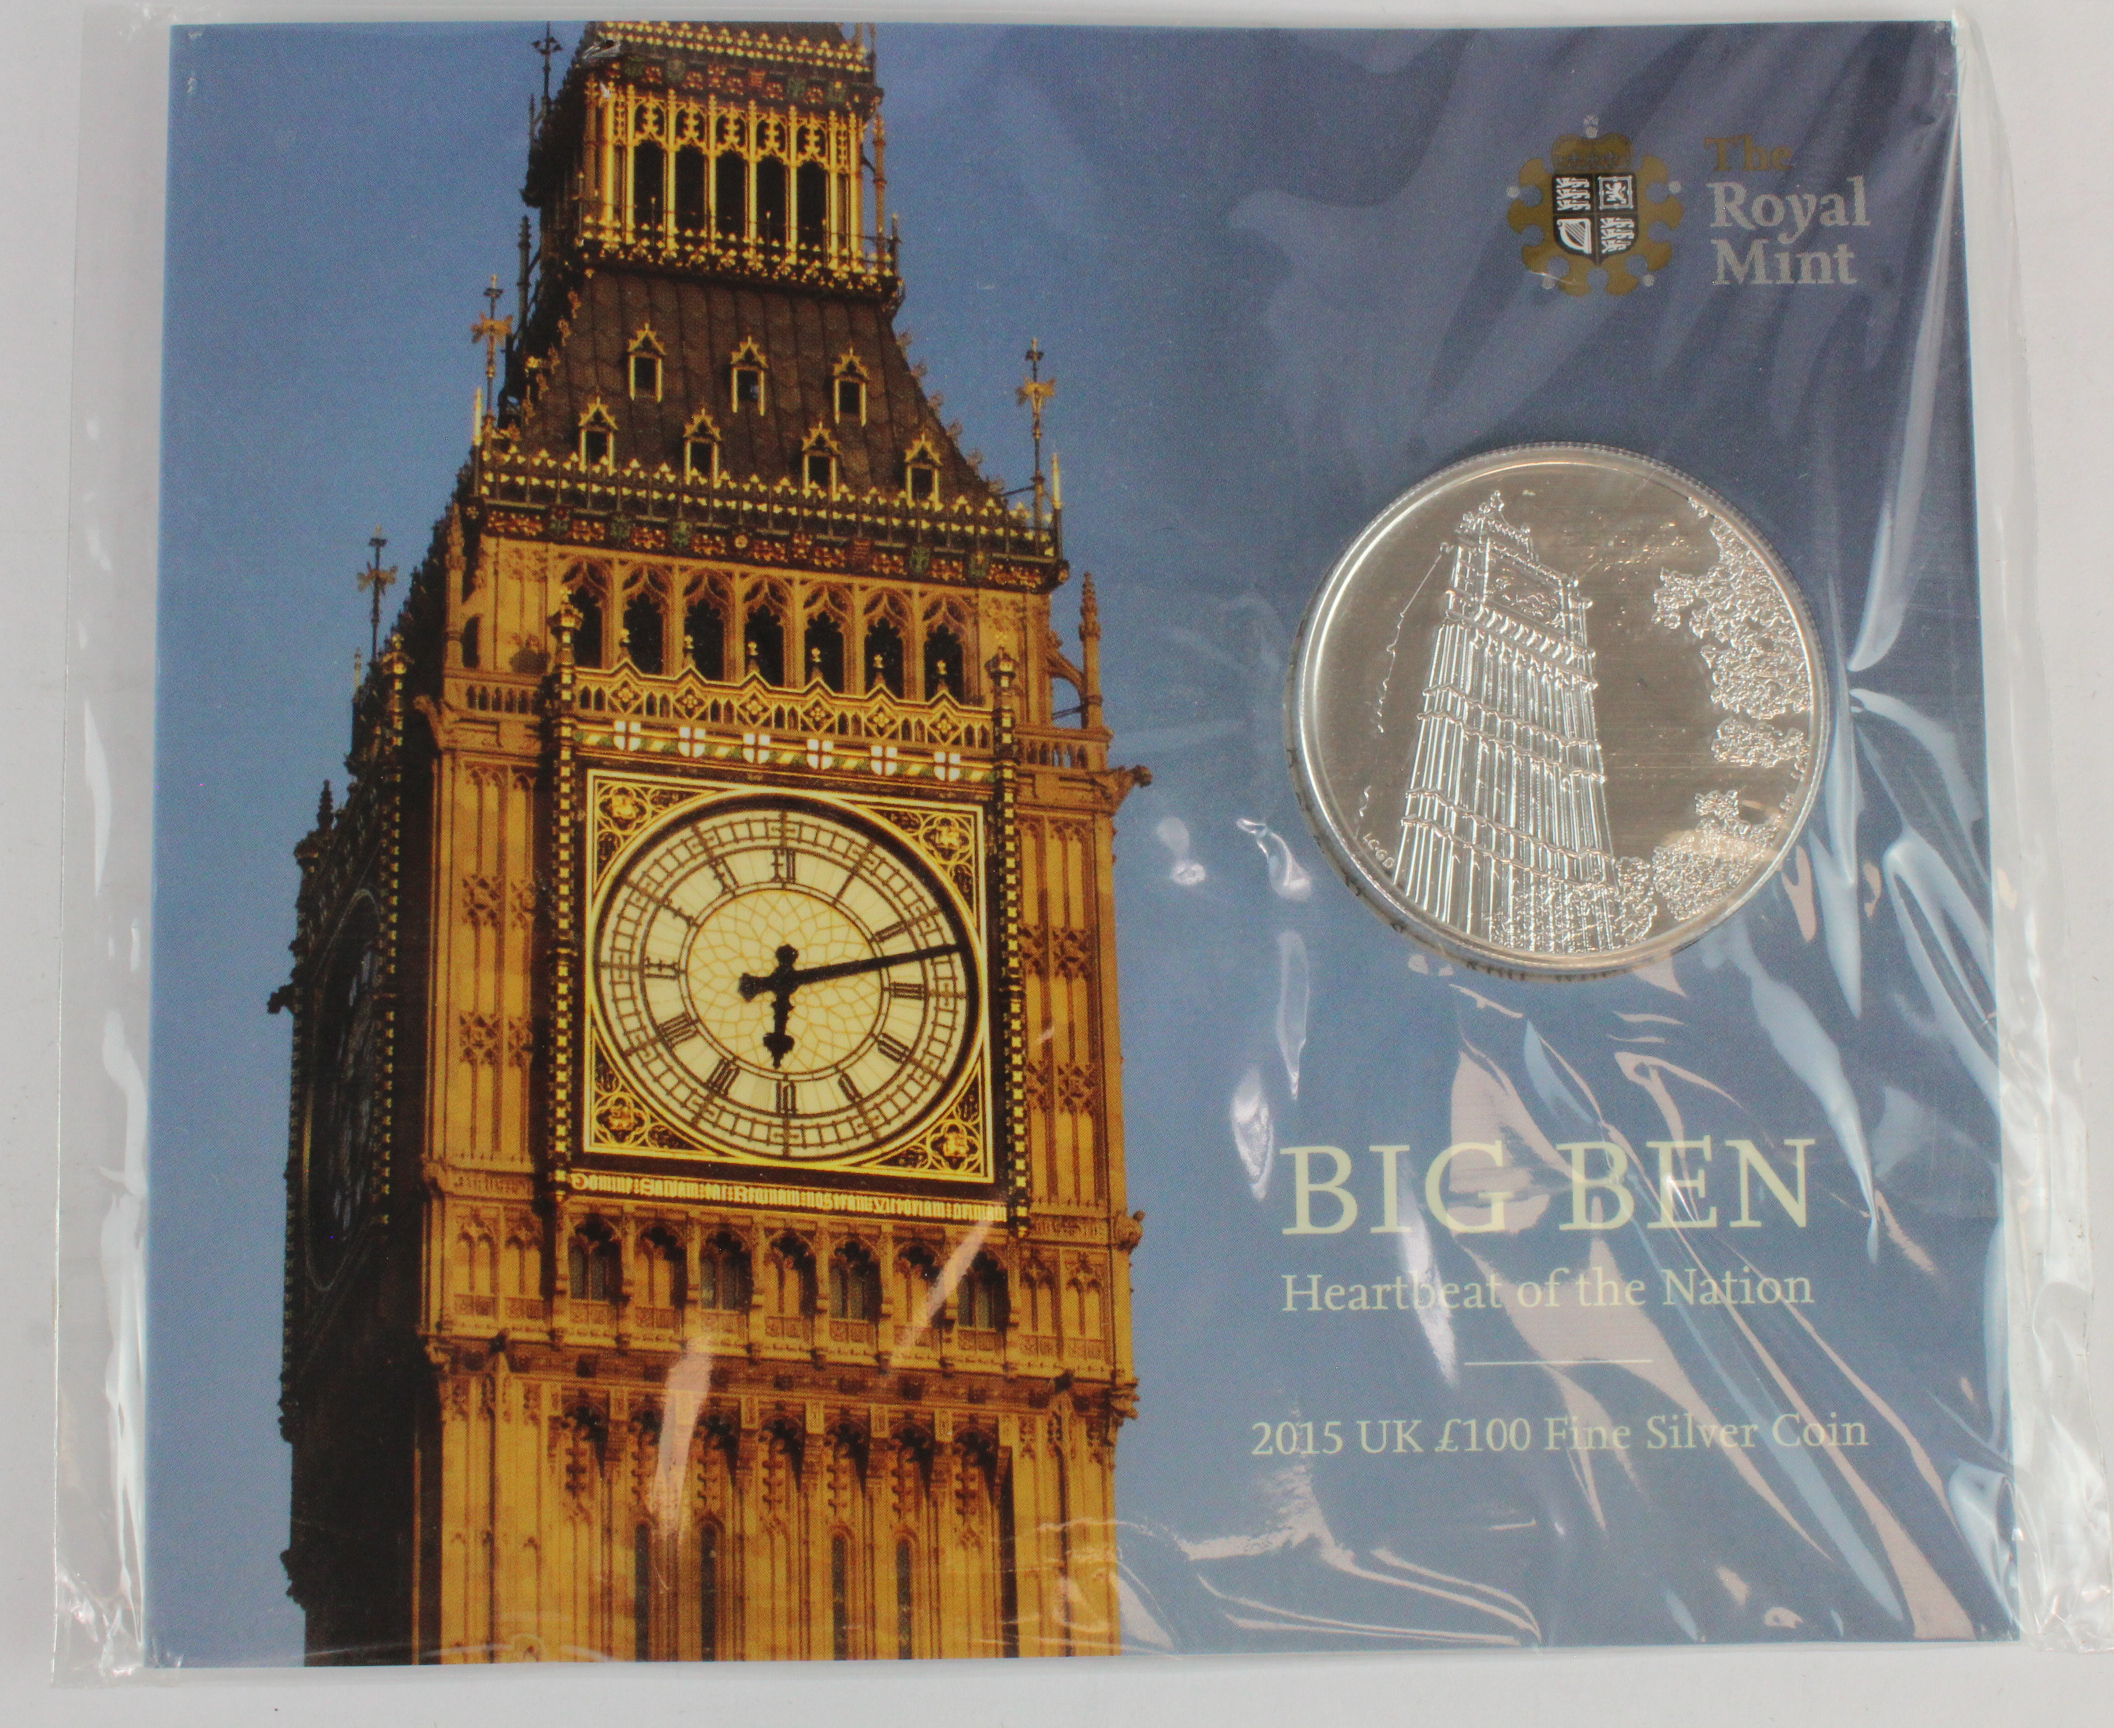 Silver £100 2015 "Big Ben" BU in the Royal Mint packaging.